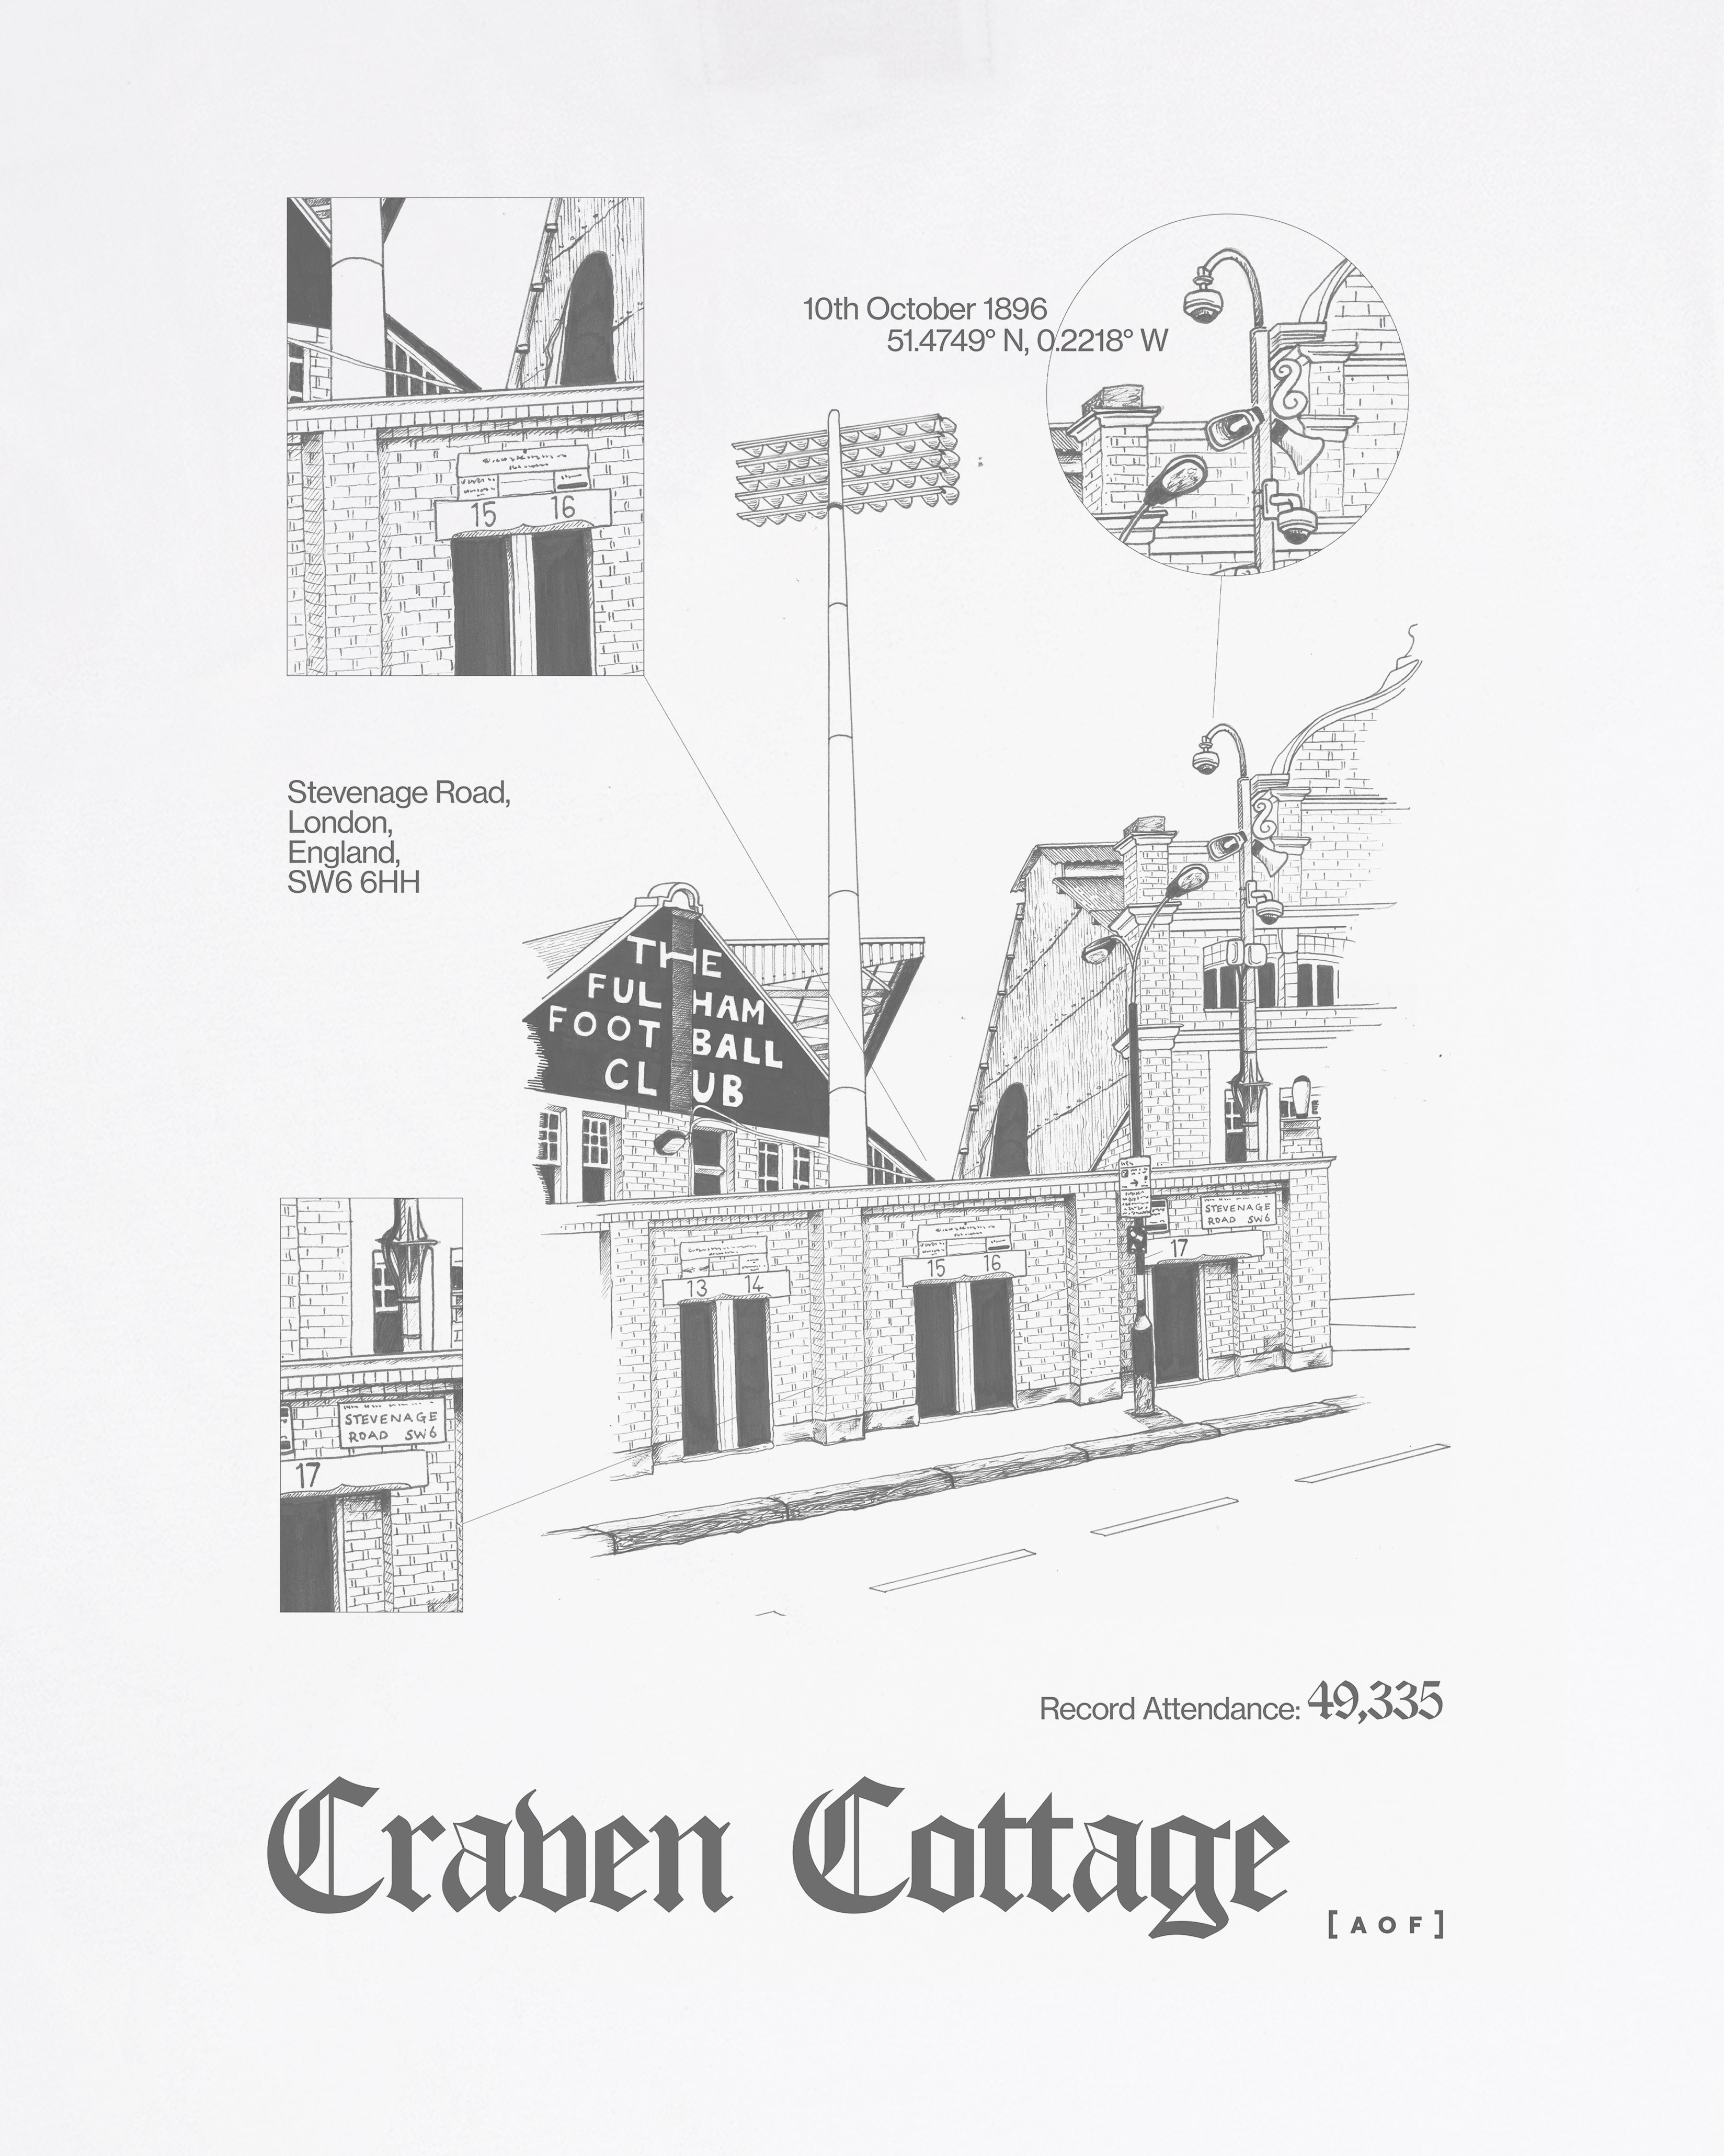 Craven Cottage Blueprint - Tee or Sweat